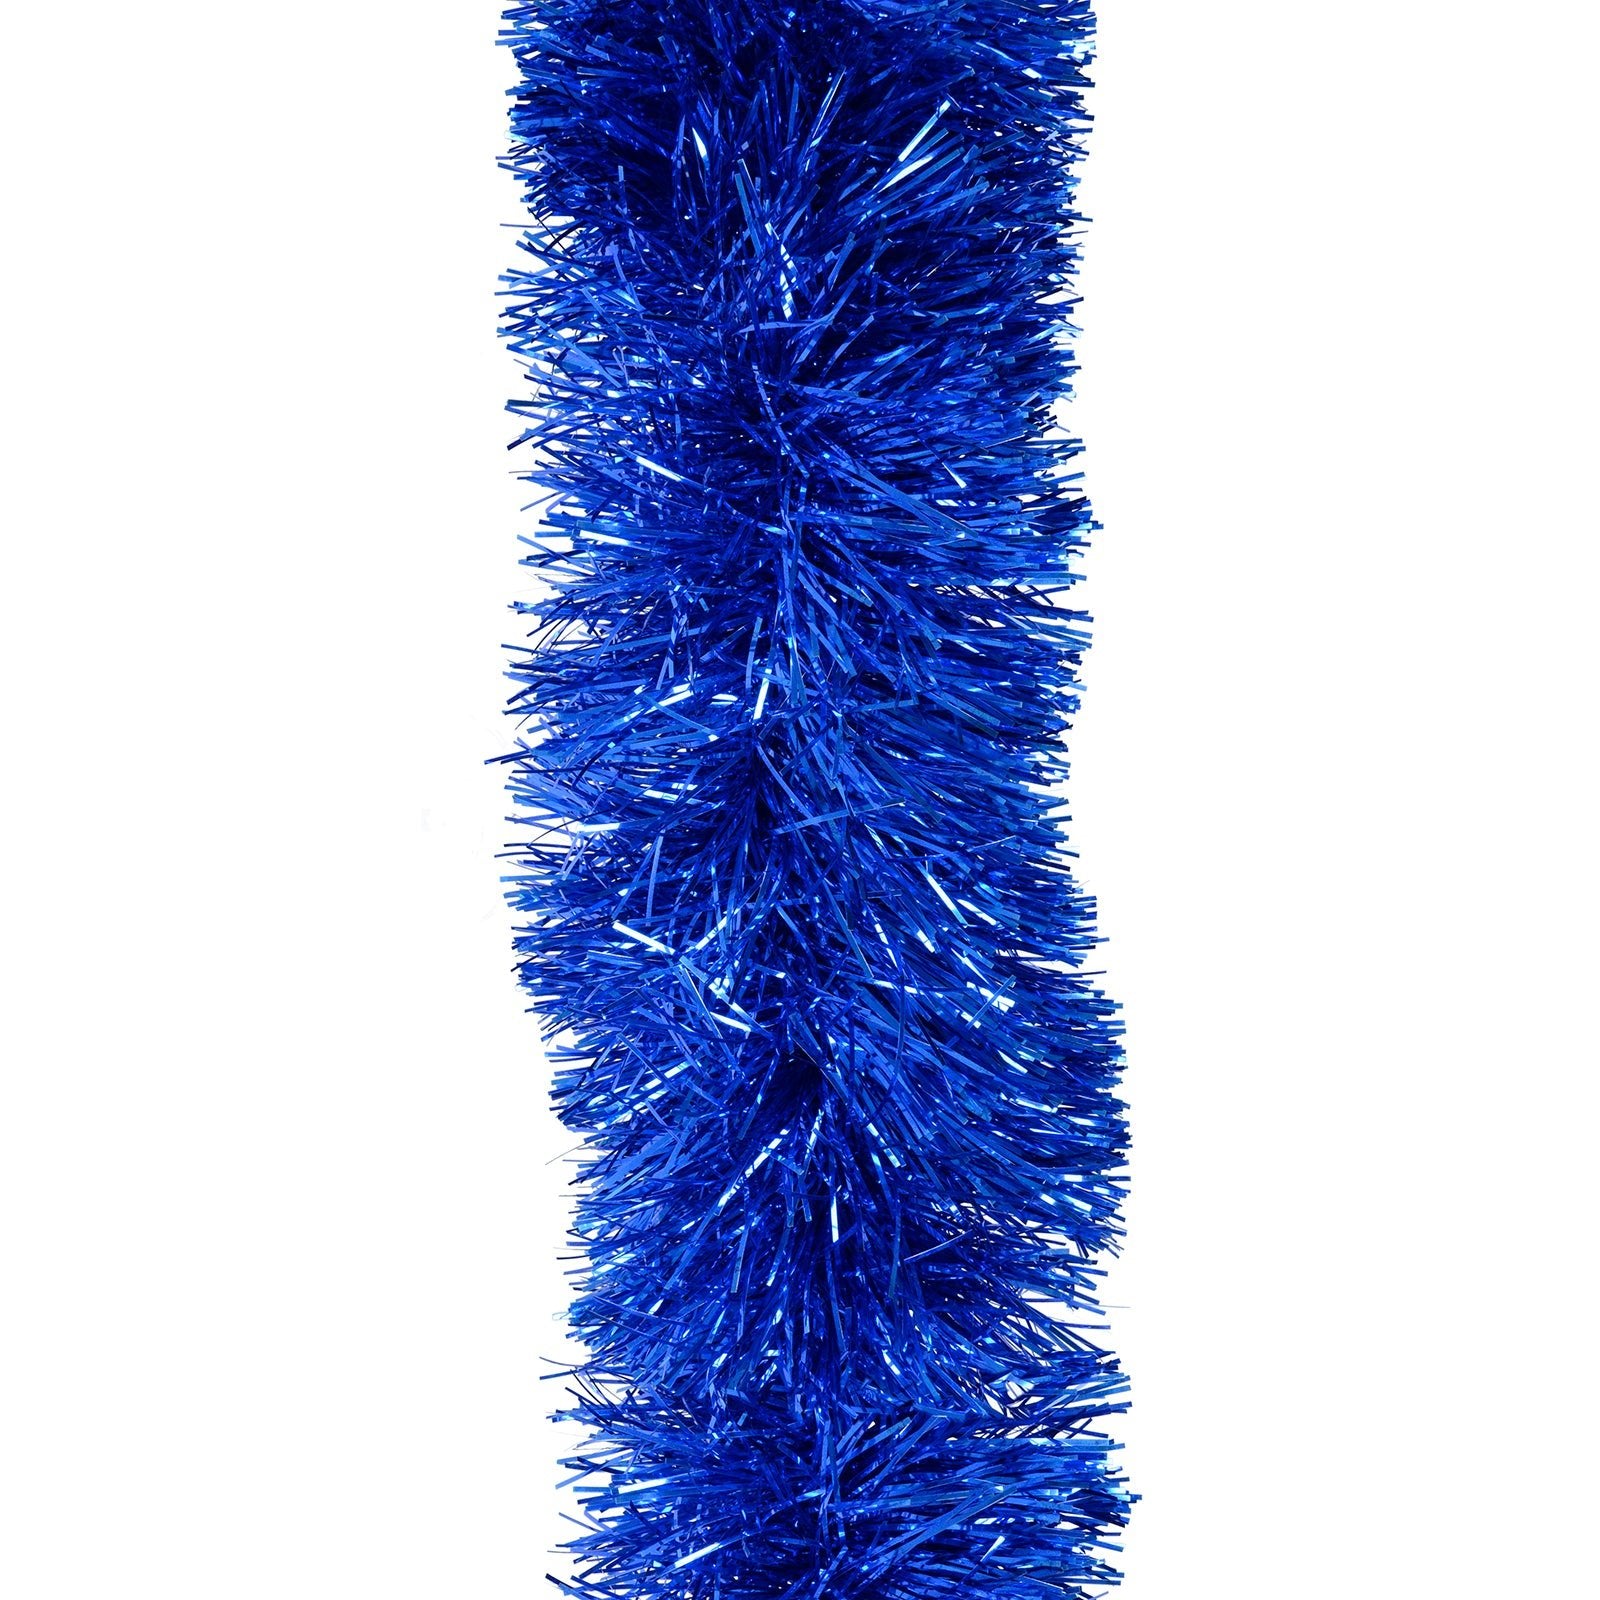 Mr Crimbo Luxury Christmas Tinsel 2m Lengths Various Colours - MrCrimbo.co.uk -XS6545 - Blue -christmas tinsel